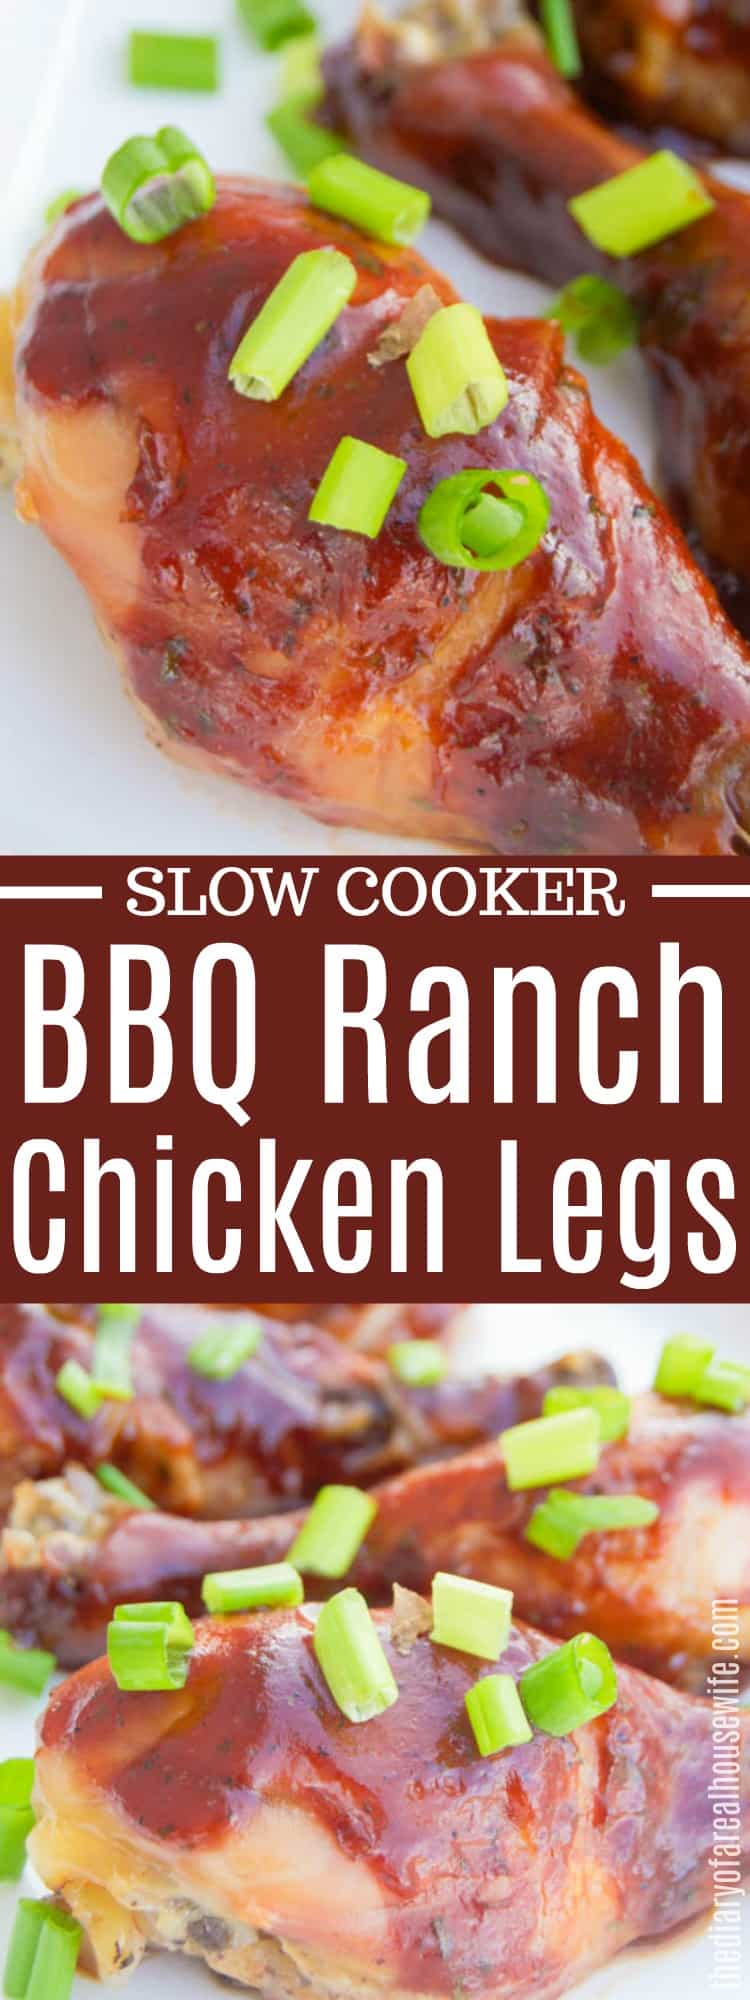 Slow Cooker BBQ Ranch Chicken Legs